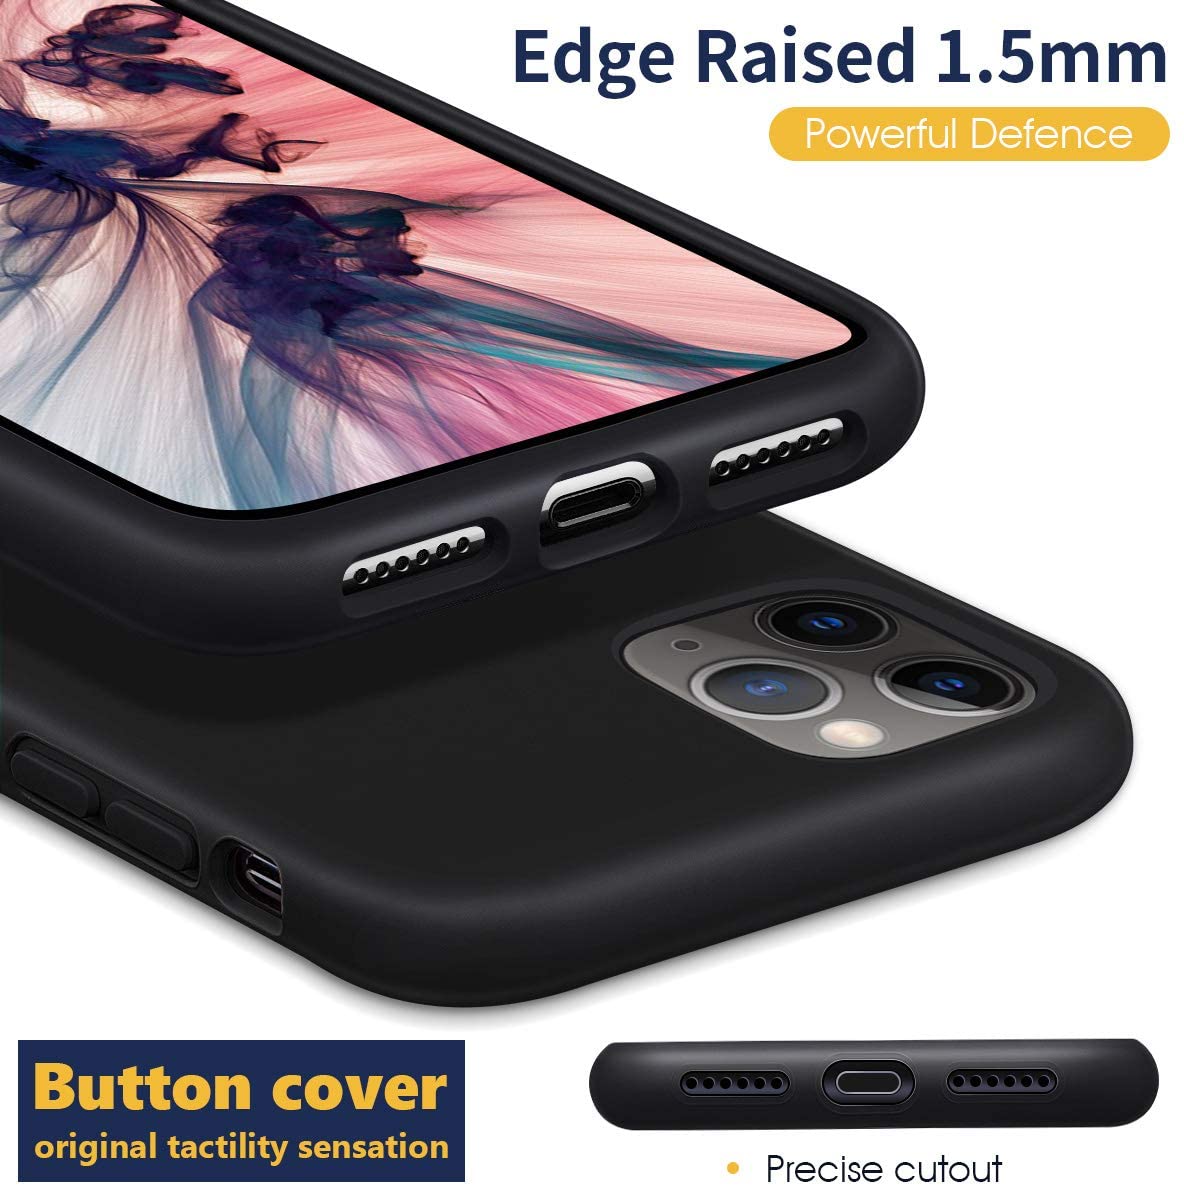 Liquid silicon  Case Compatible with iPhone 11 Case - e4cents